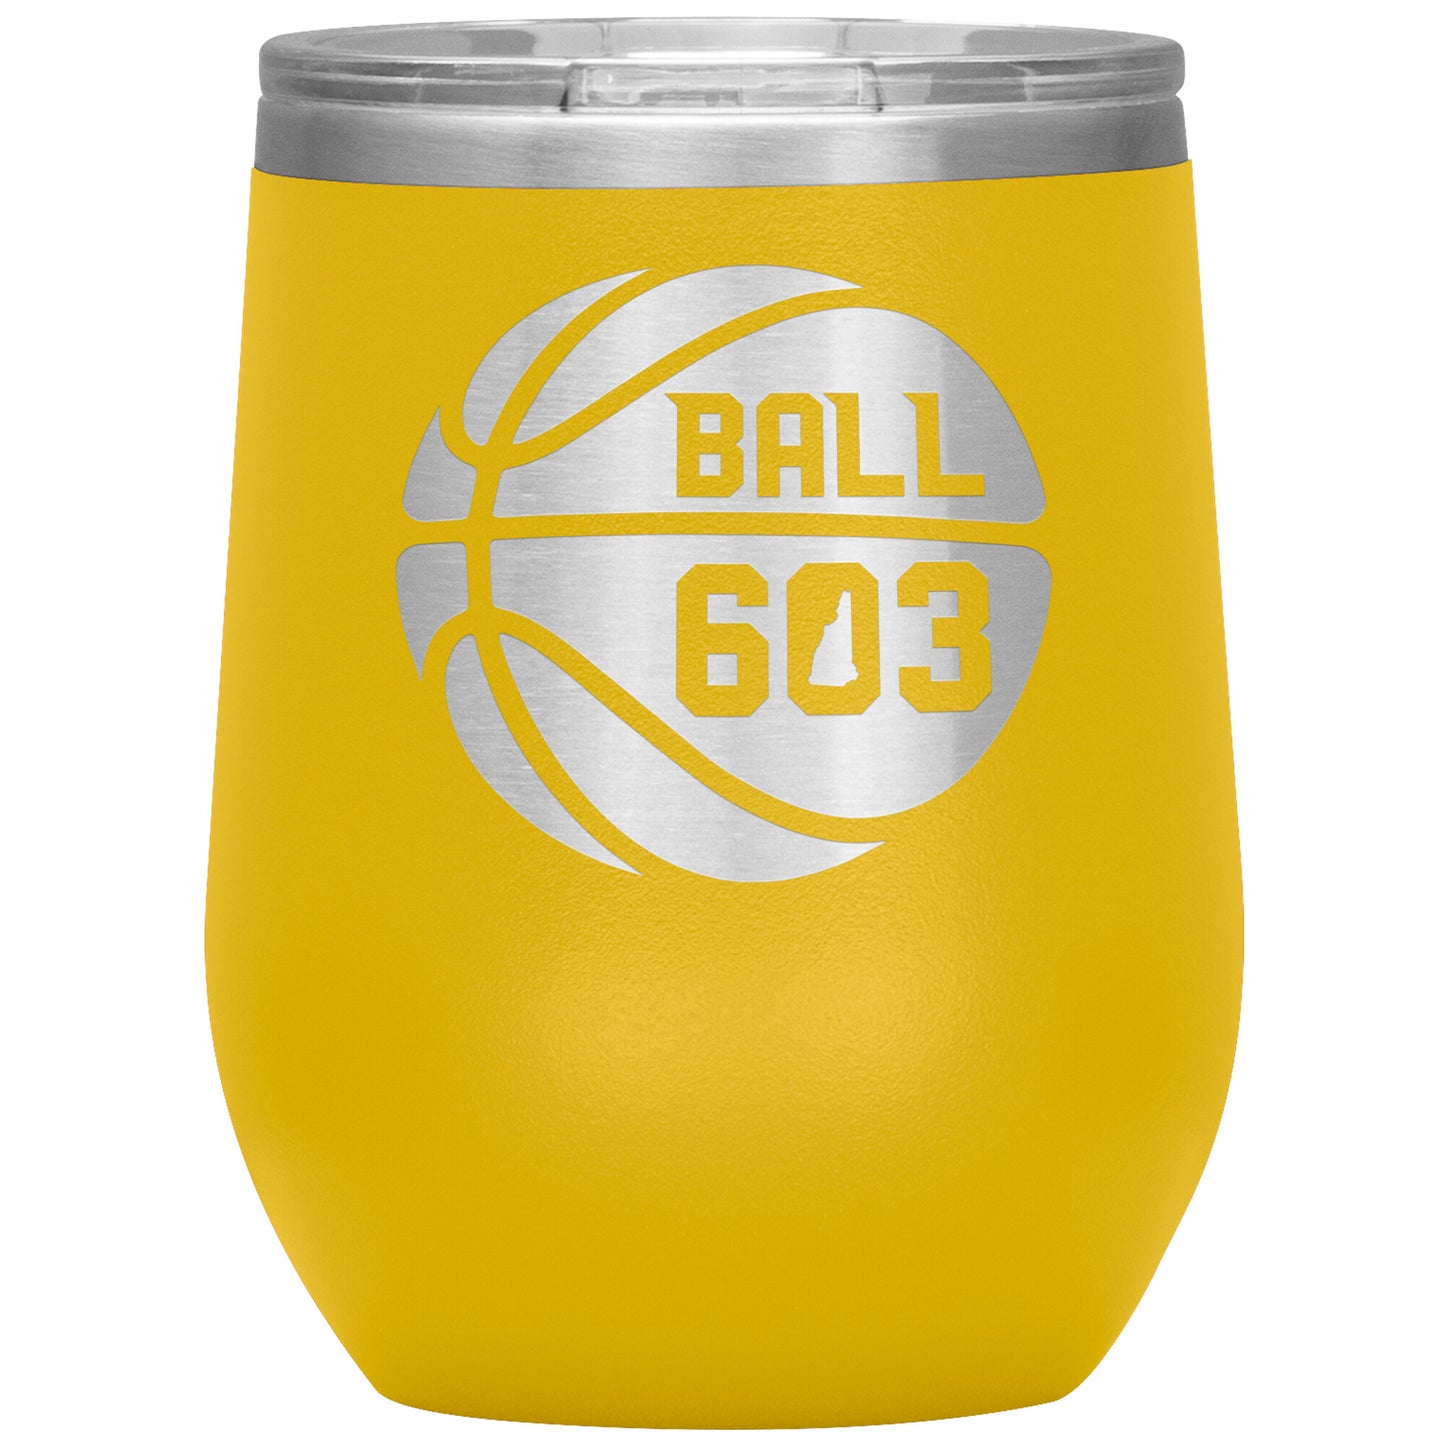 Ball 603 Wine Tumbler (12oz)